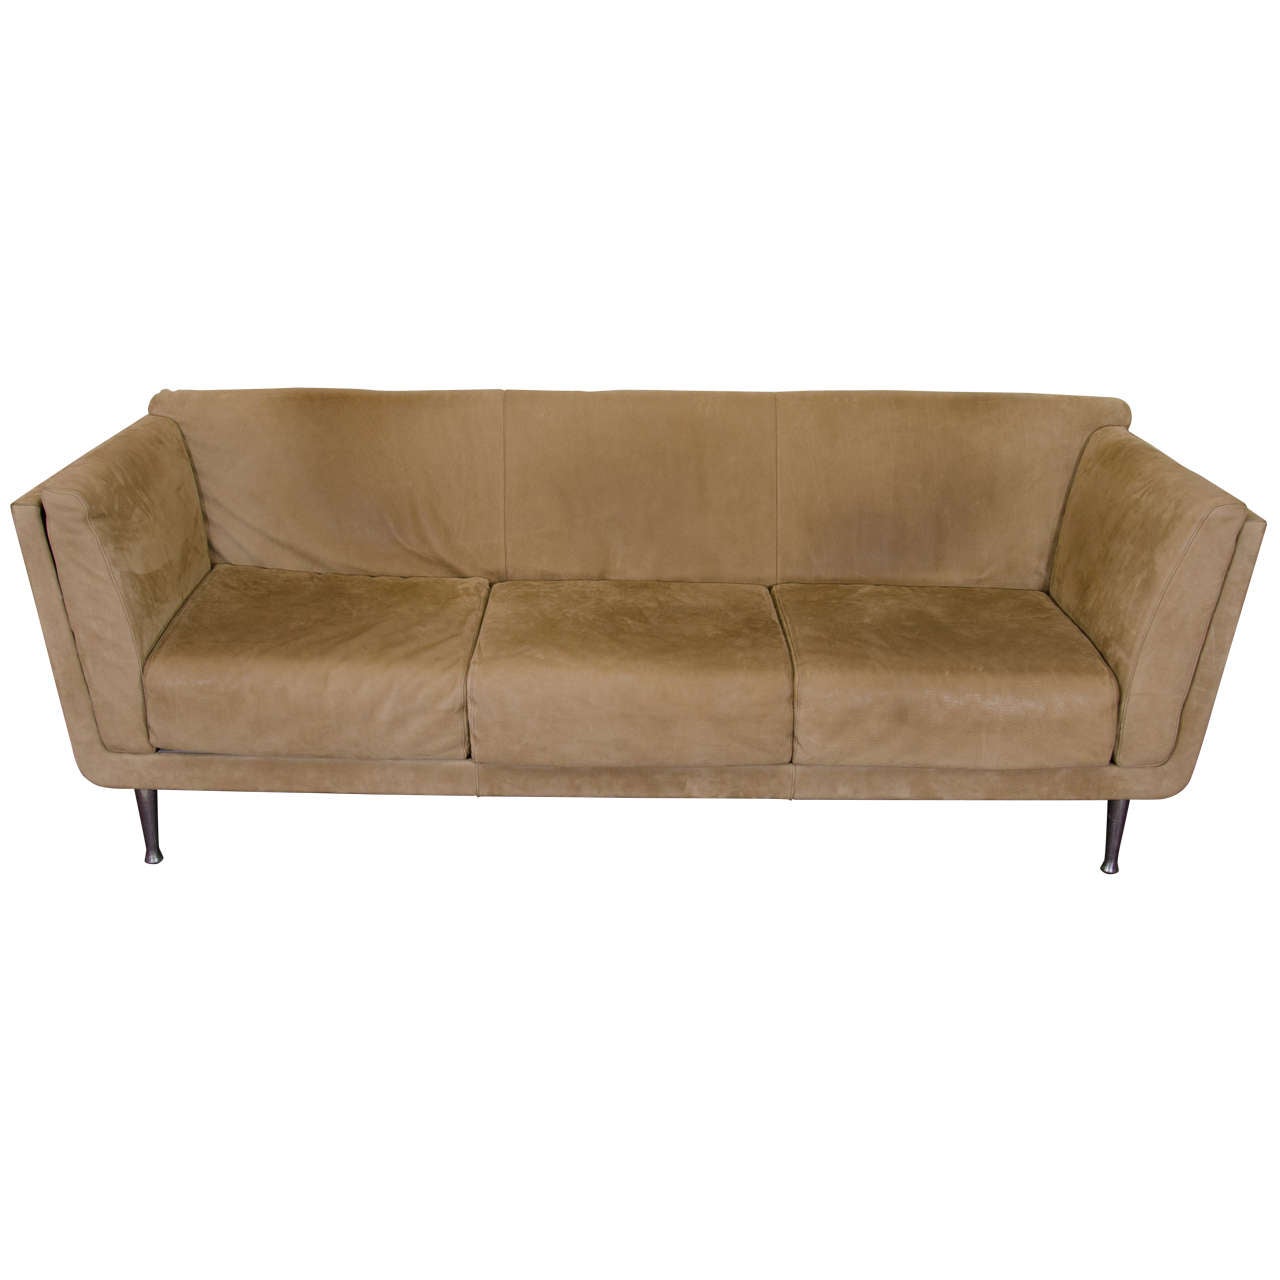 Herman Miller Three-Seat Sofa Designed by Mark Goetz